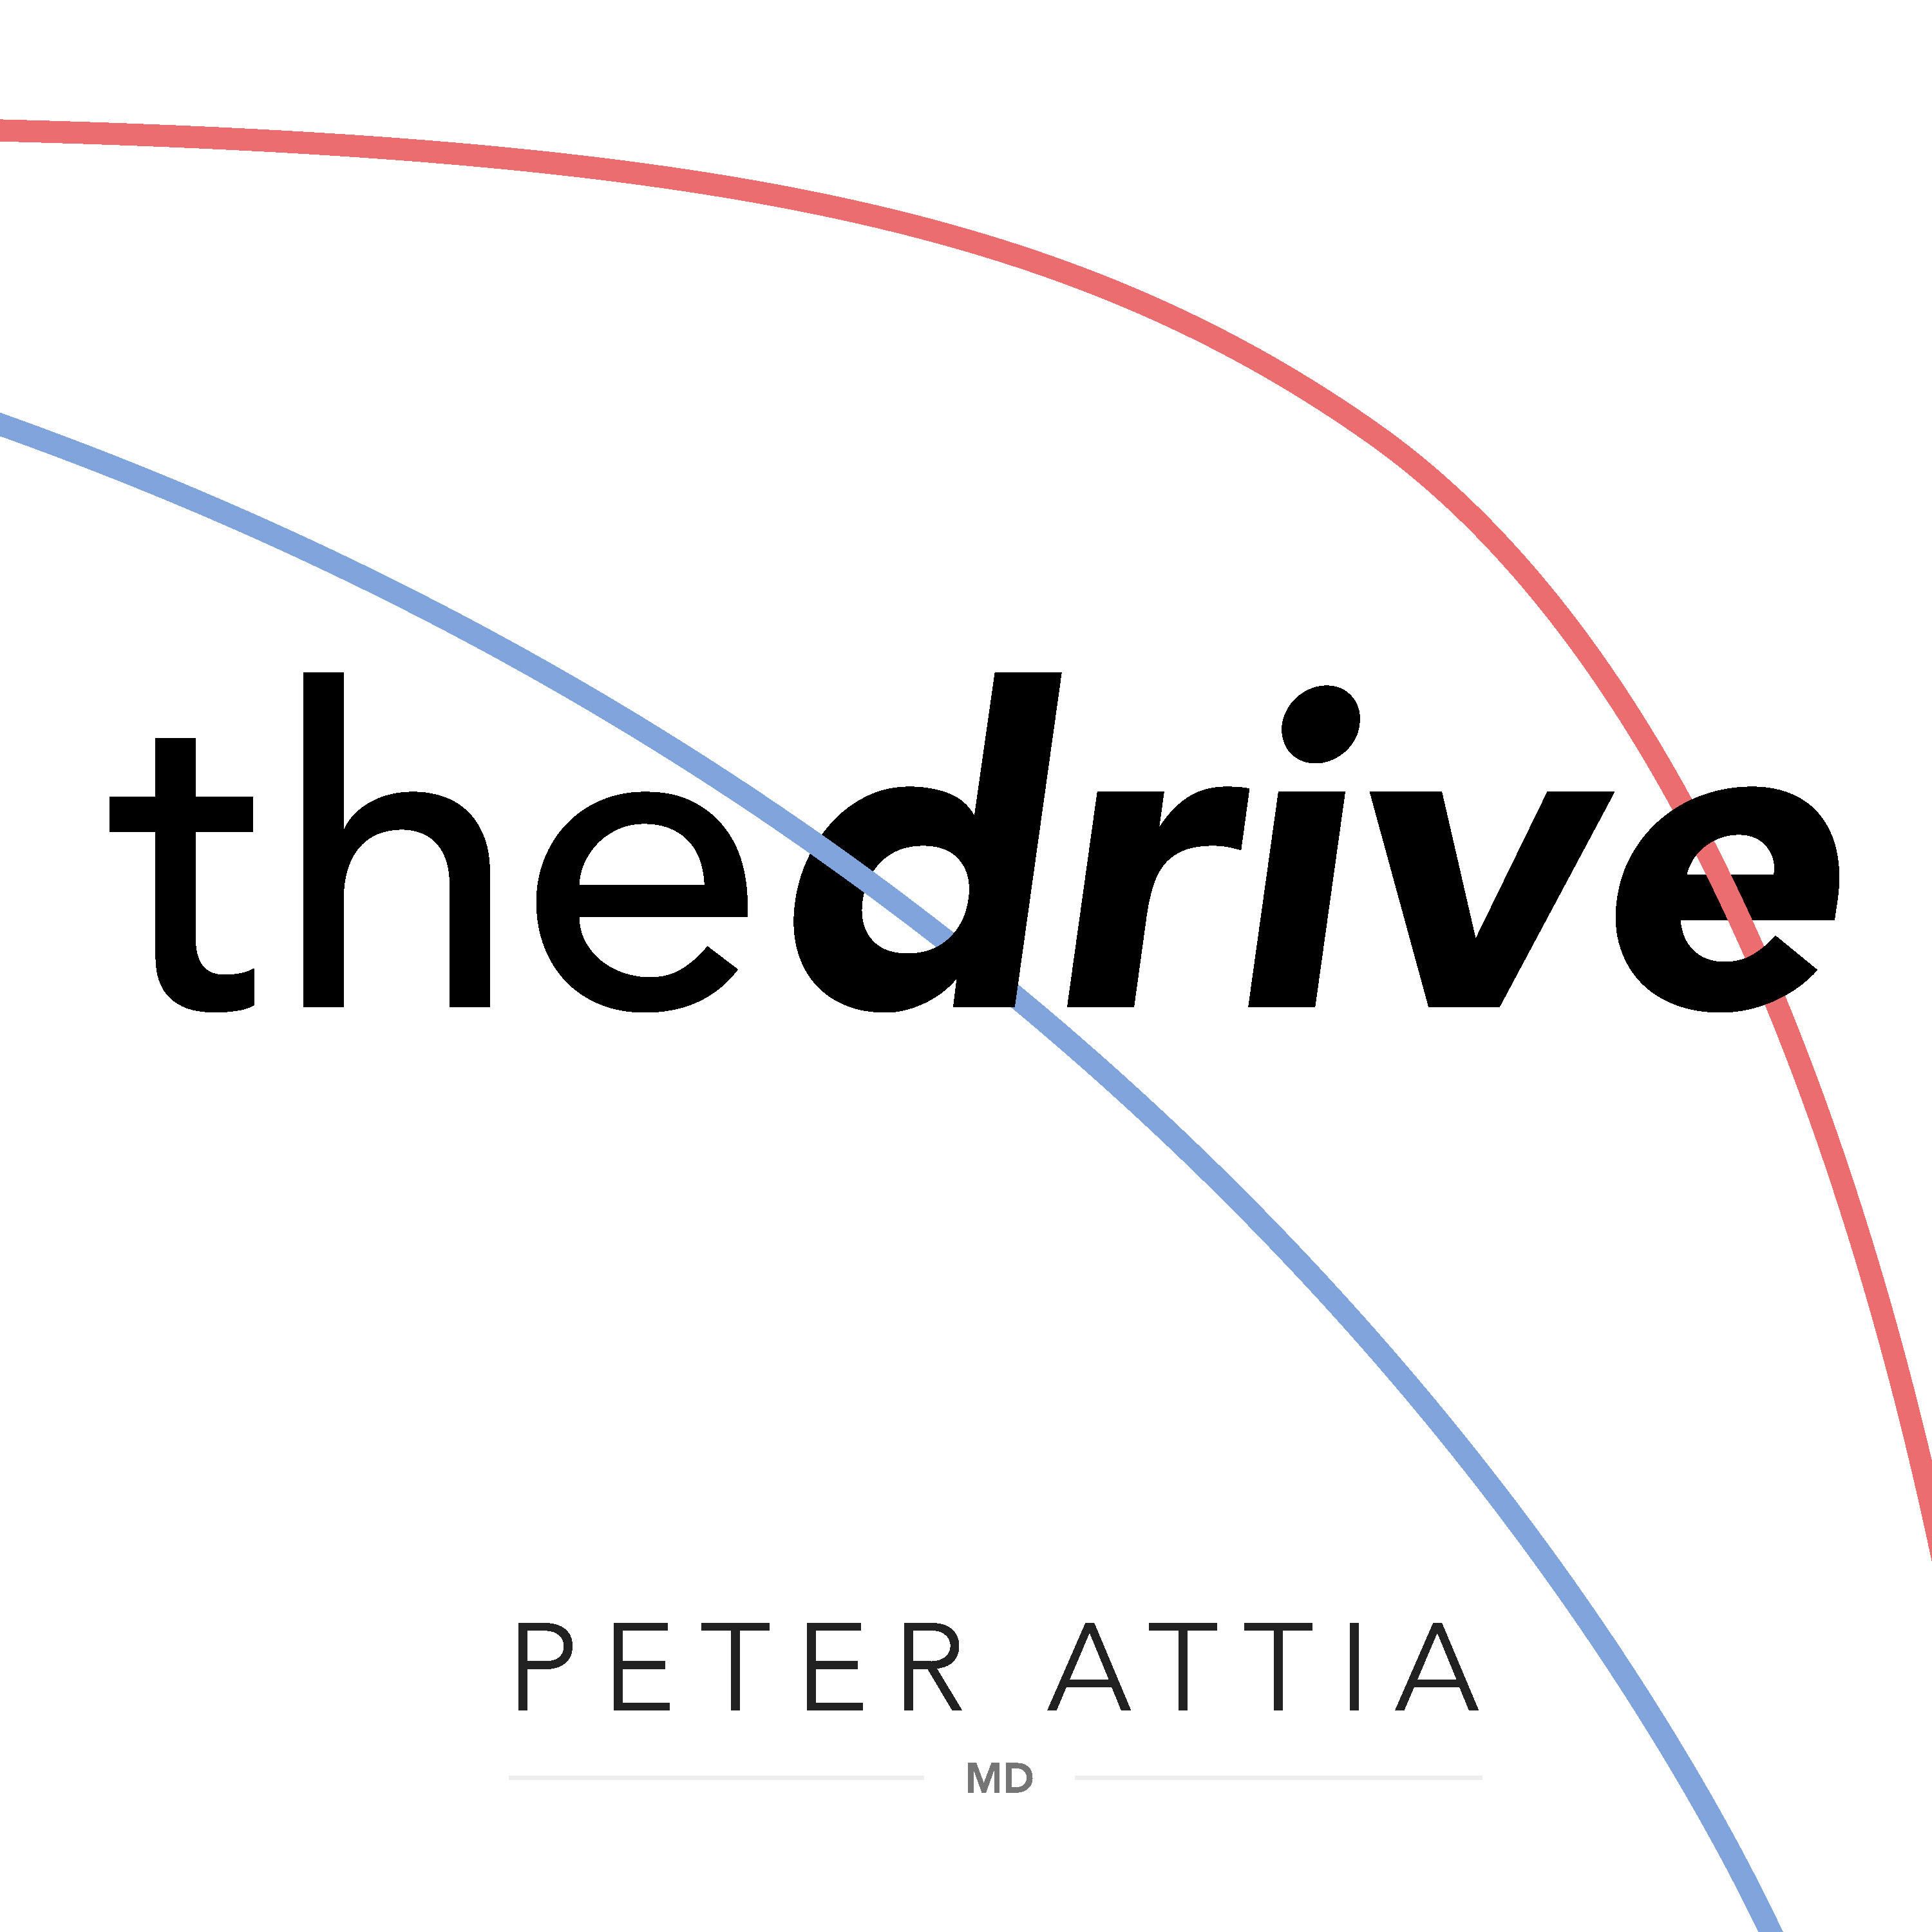 The Peter Attia Drive